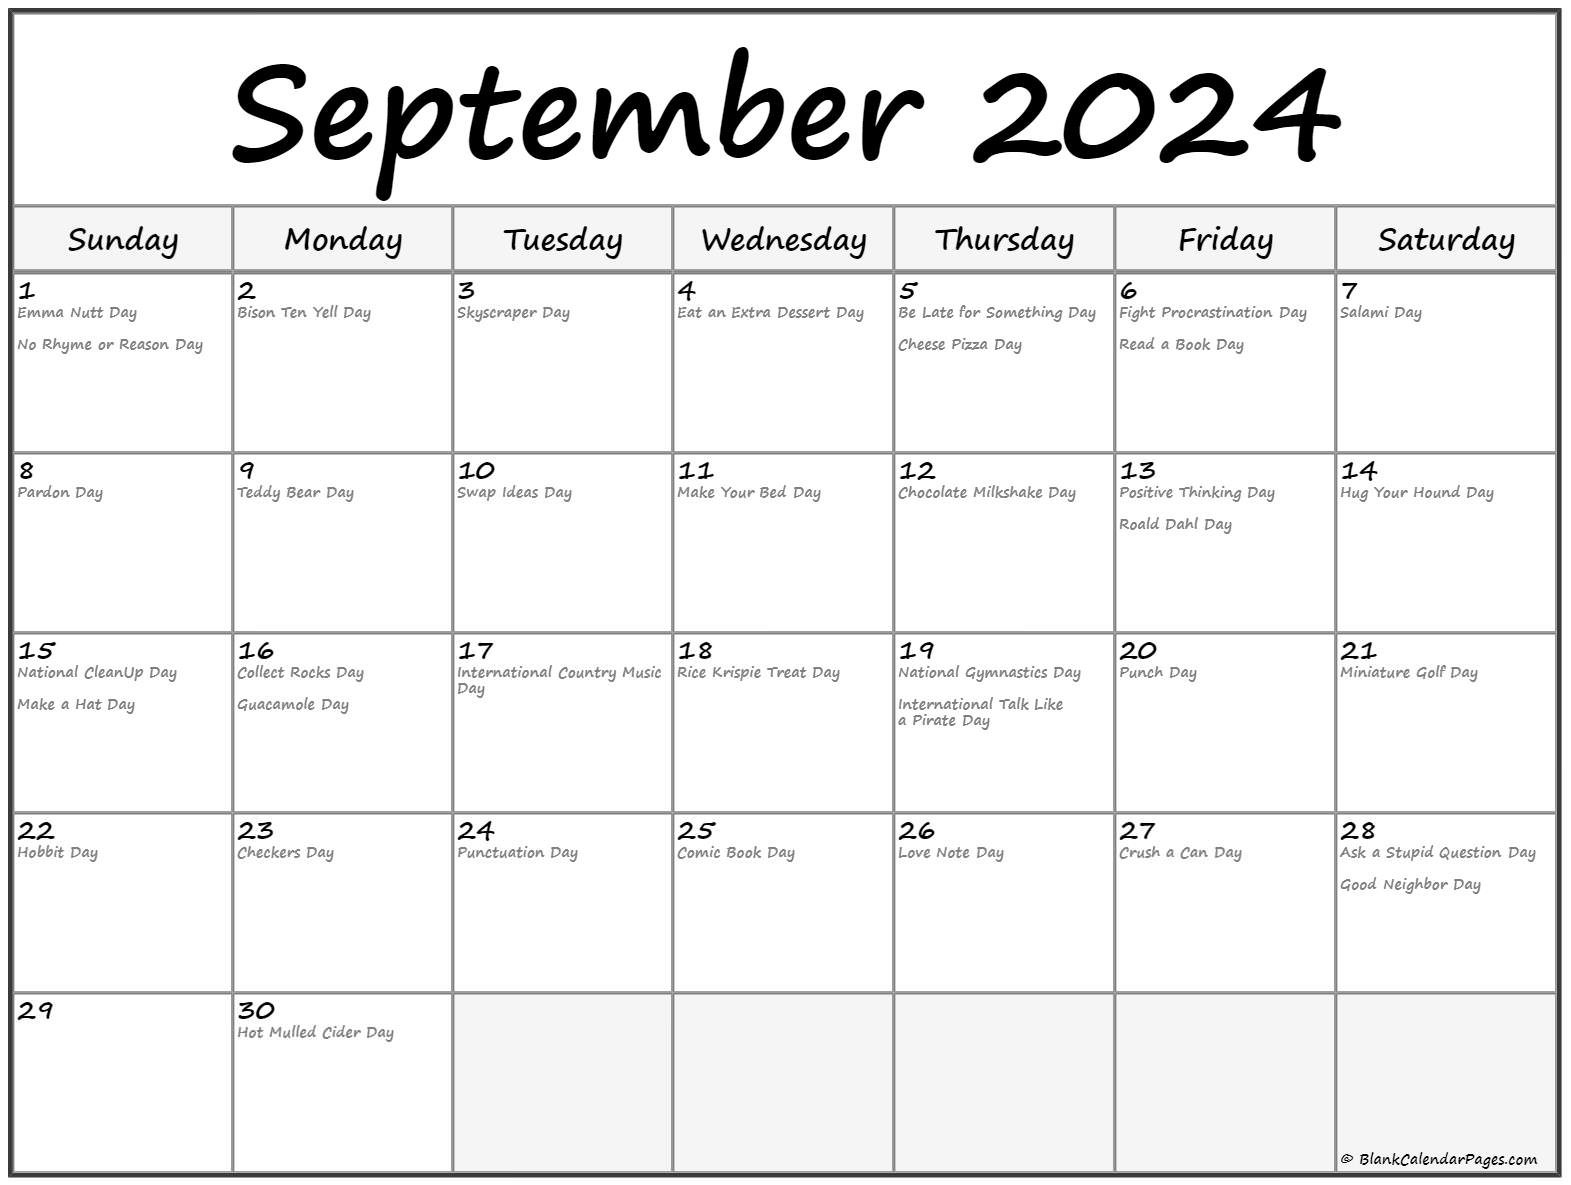 September 2020 calendar with holidays